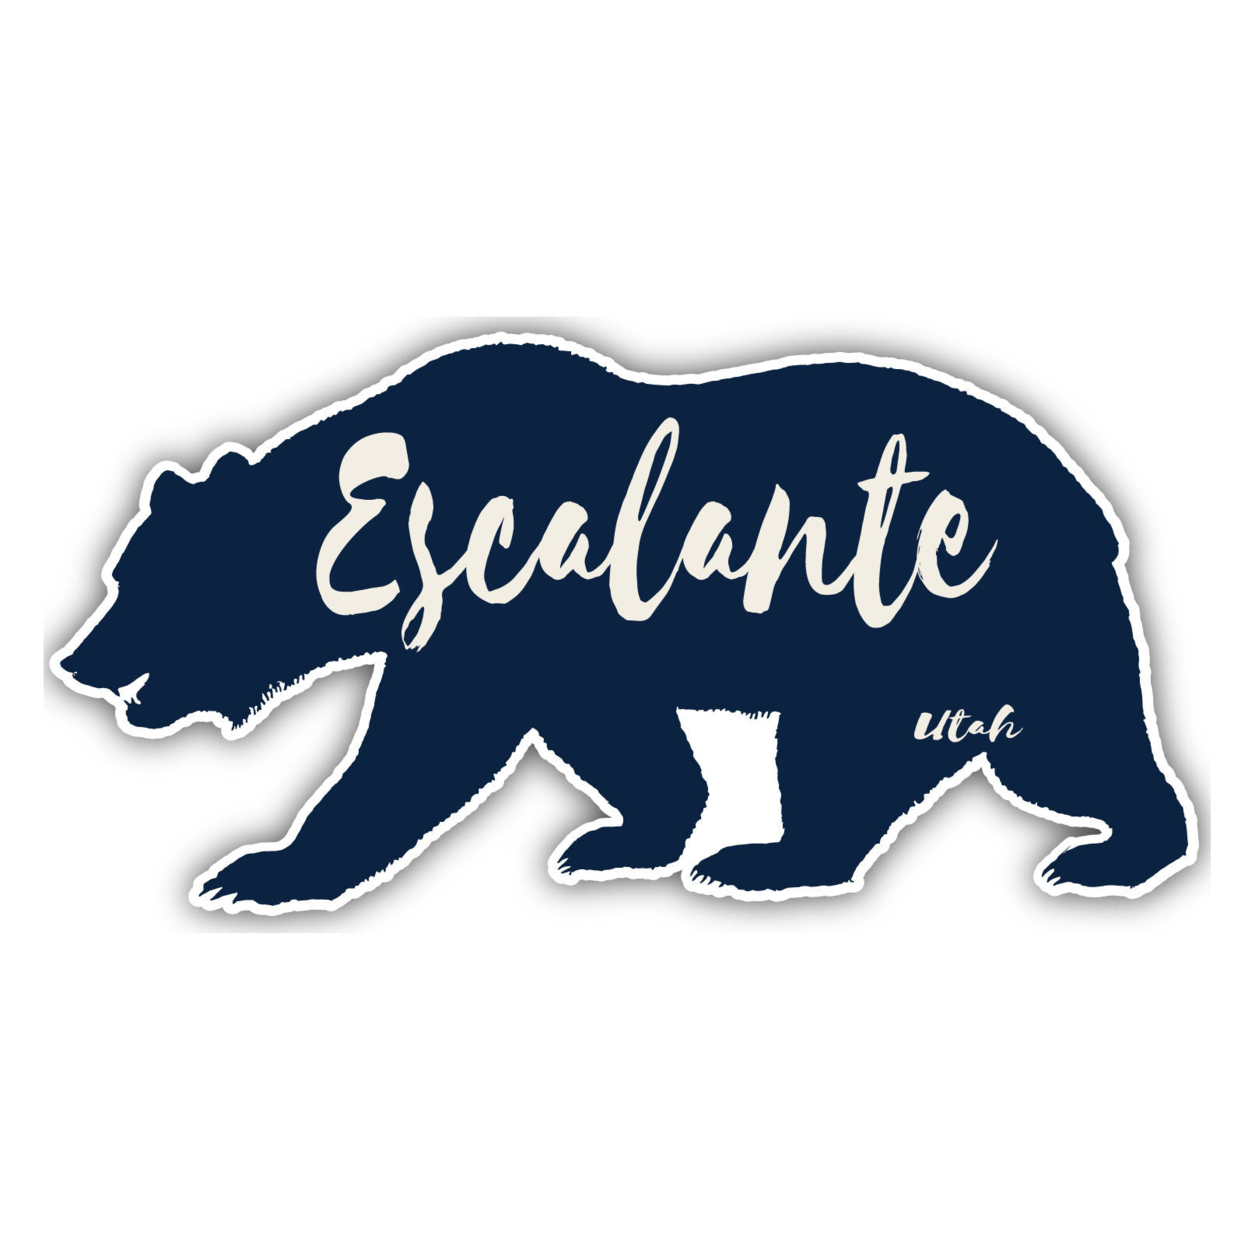 Escalante Utah Souvenir Decorative Stickers (Choose Theme And Size) - Single Unit, 2-Inch, Bear